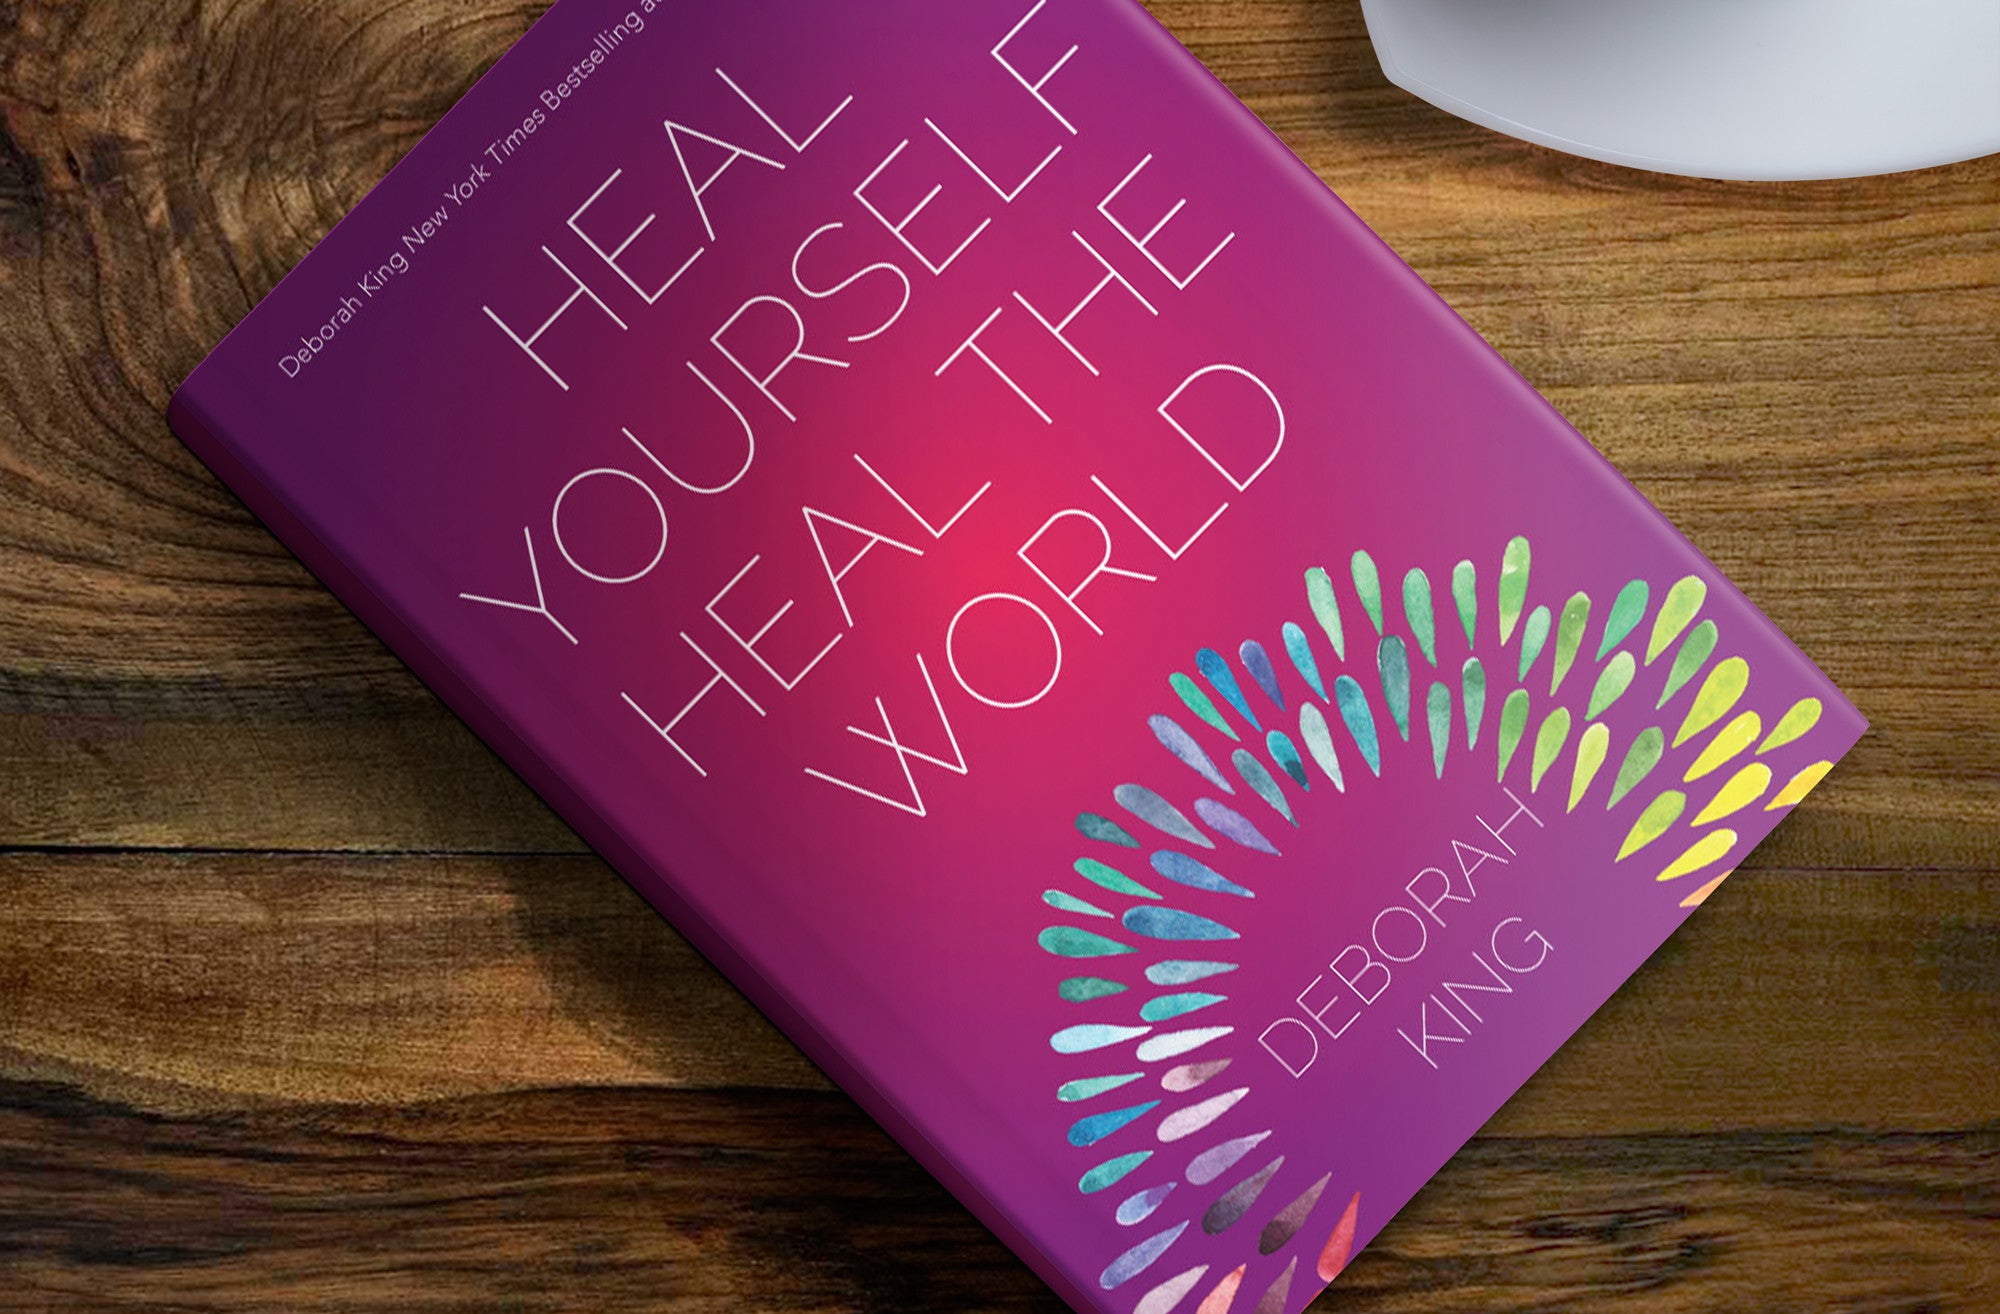 Heal Yourself--Heal the World, by Deborah King